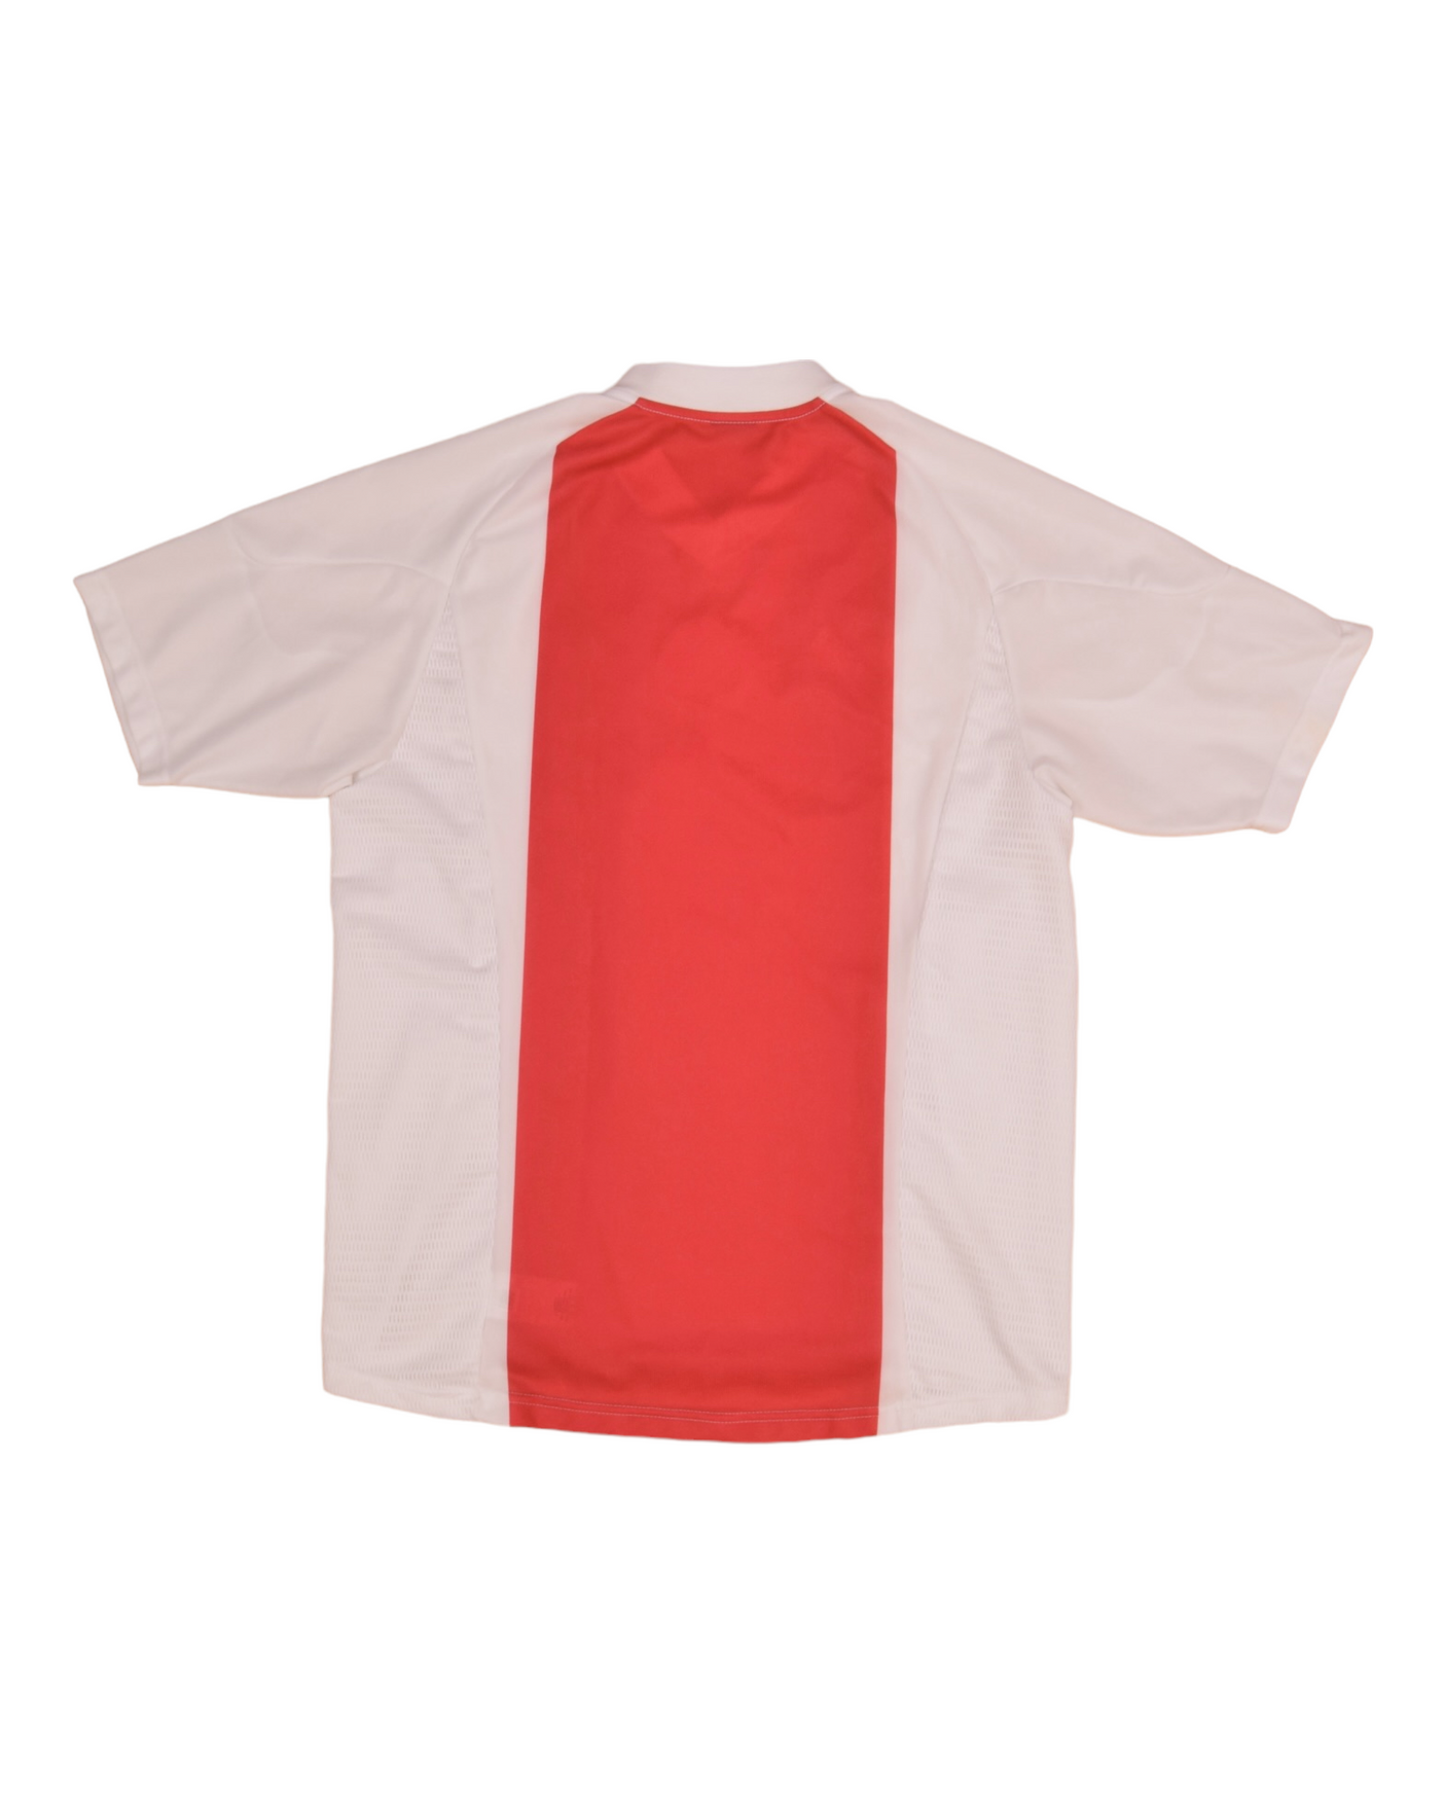 Ajax Amsterdam Adidas 2002 - 2003 - 2004 Home Football Shirt Abn Amro Size M Red White Climalite